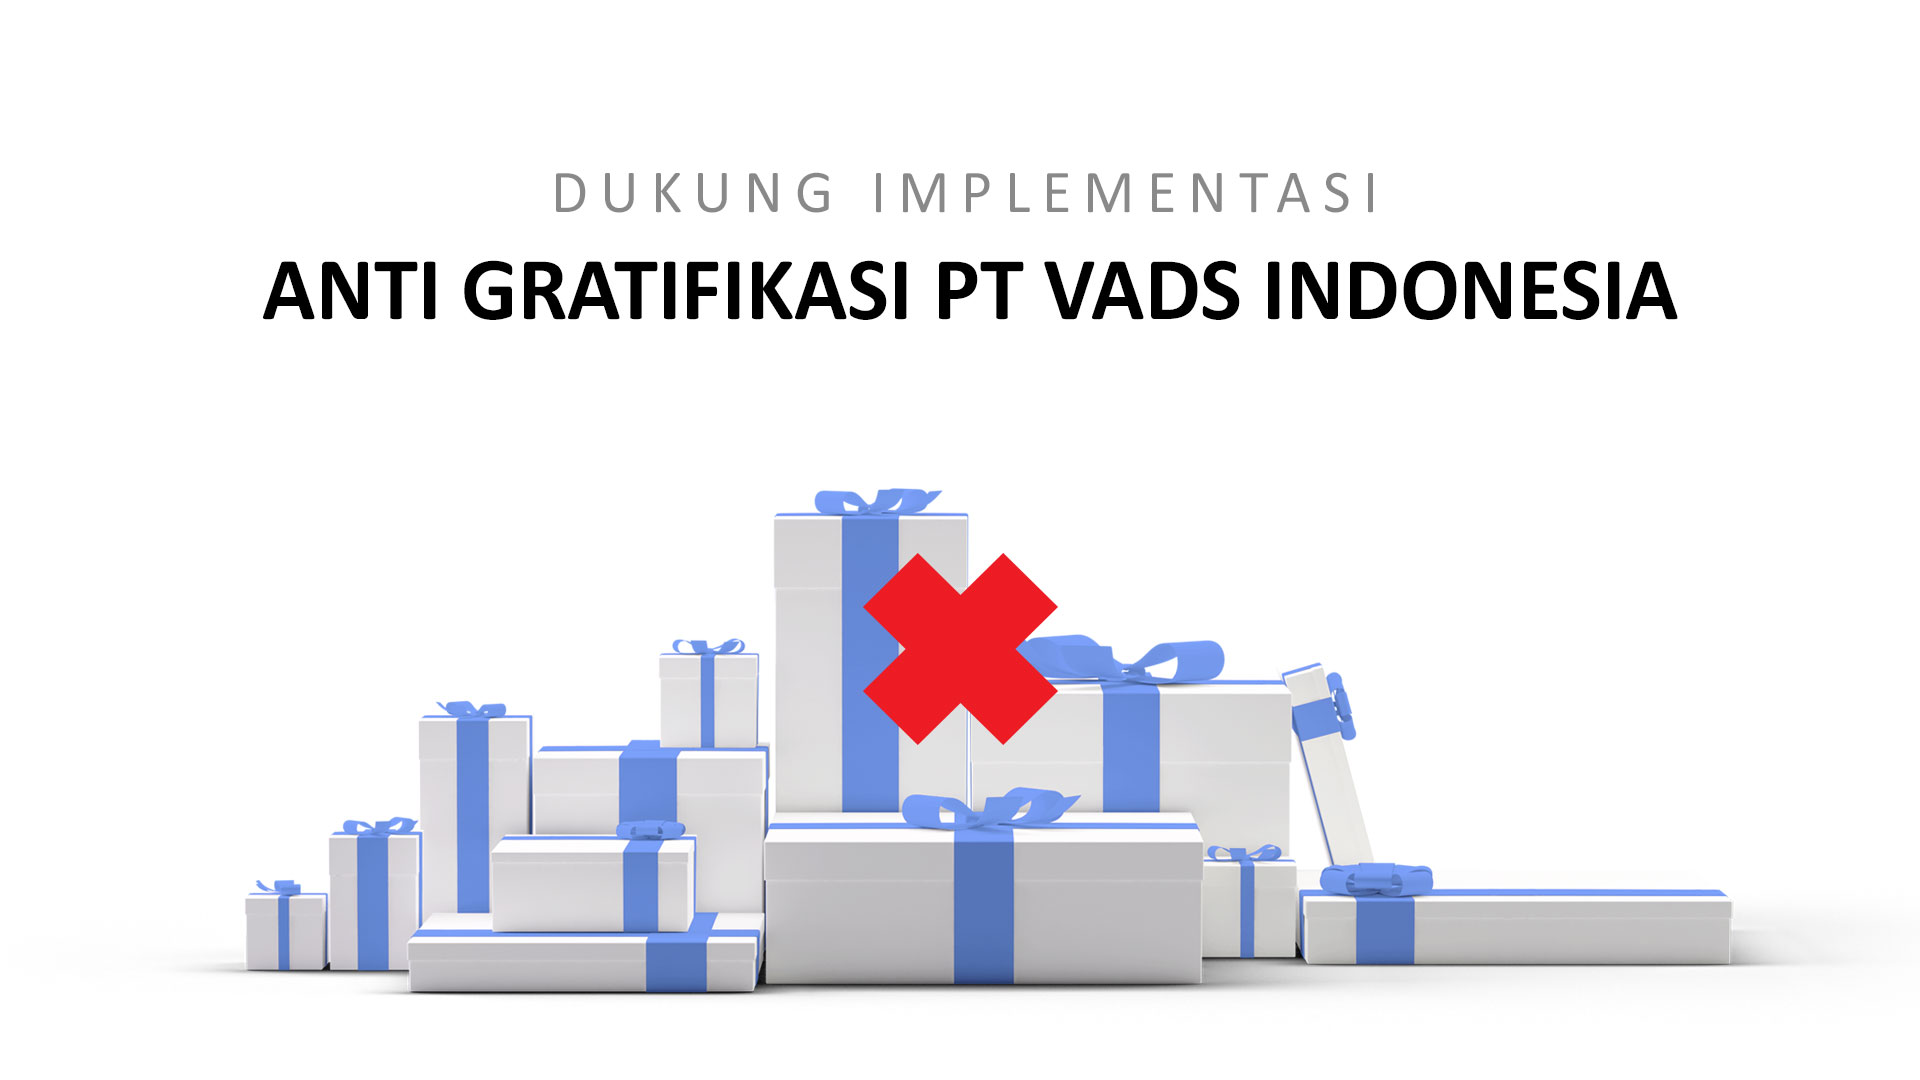 Image of Dukung Implementasi Anti Gratifikasi PT VADS Indonesia